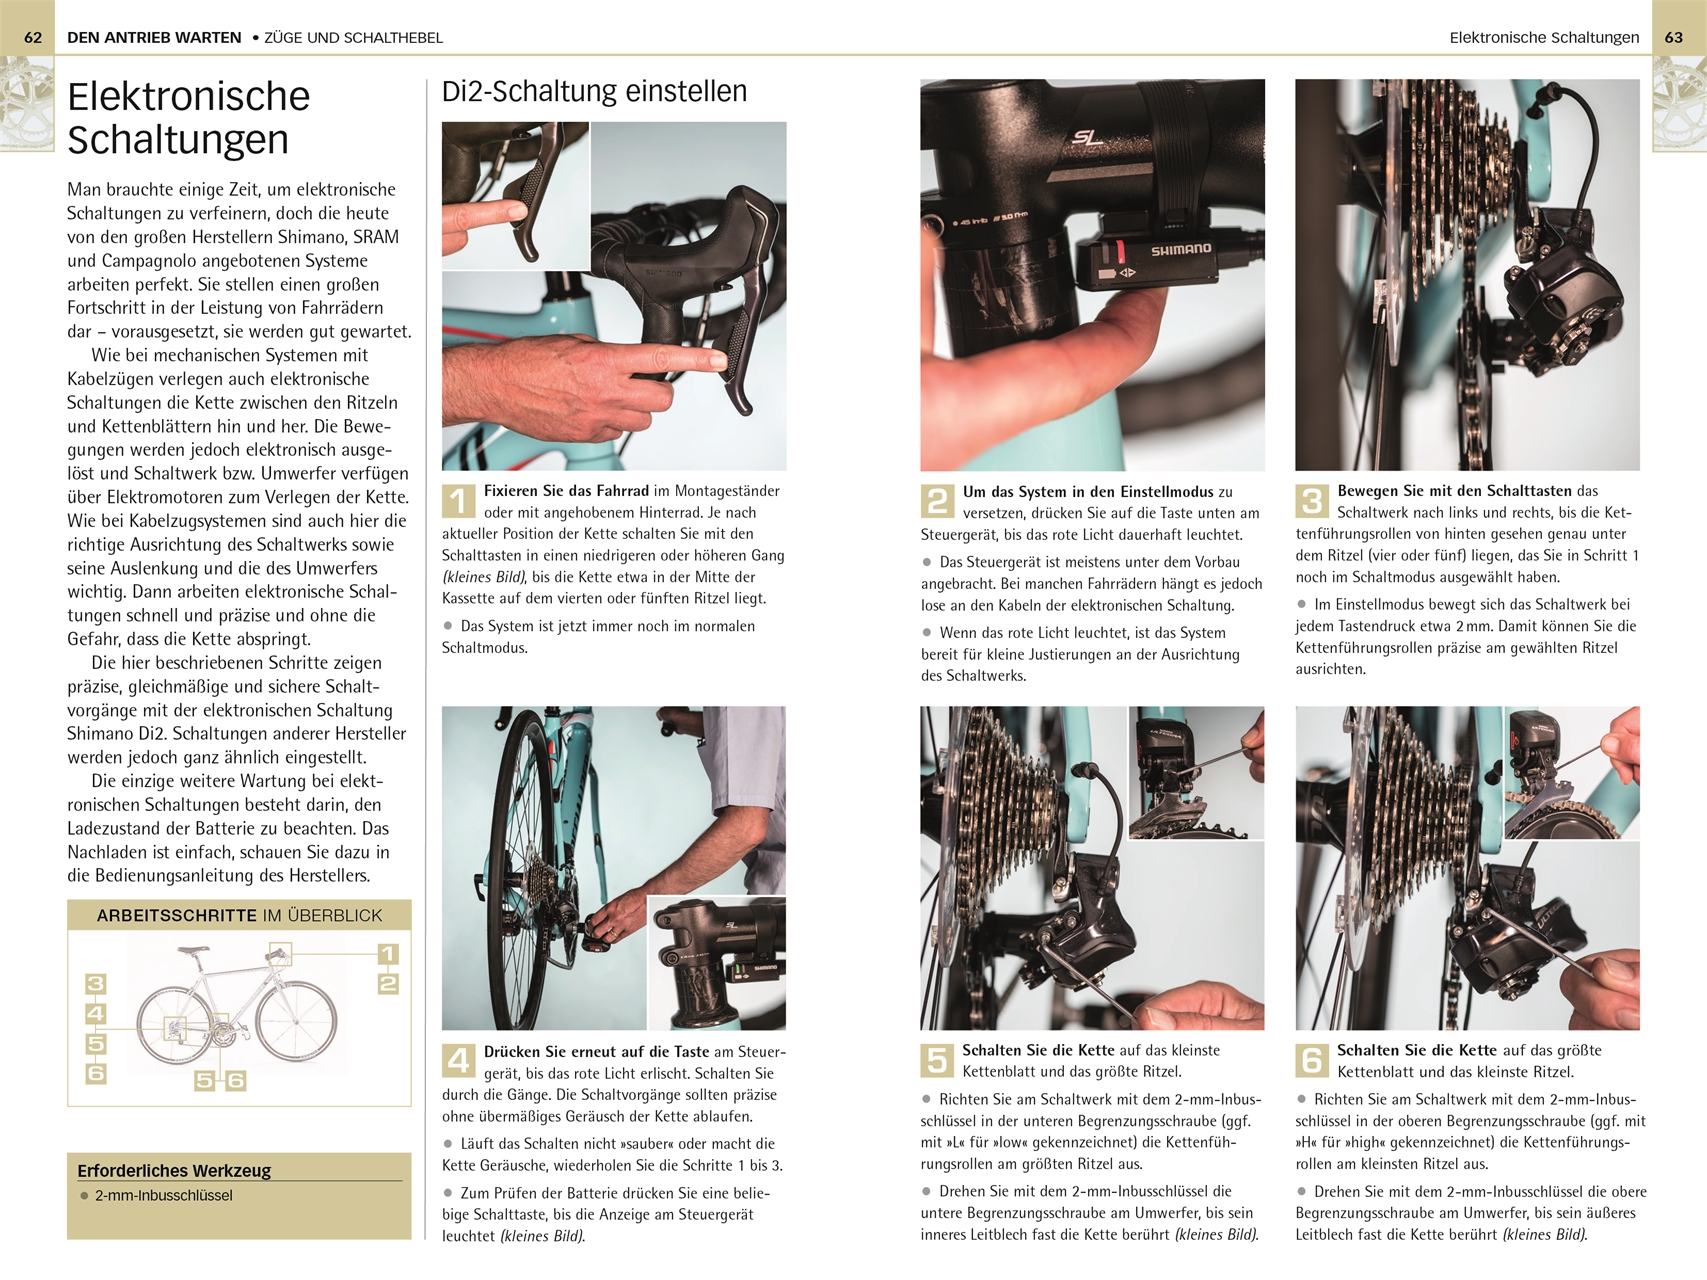 Bike-Reparatur-Handbuch